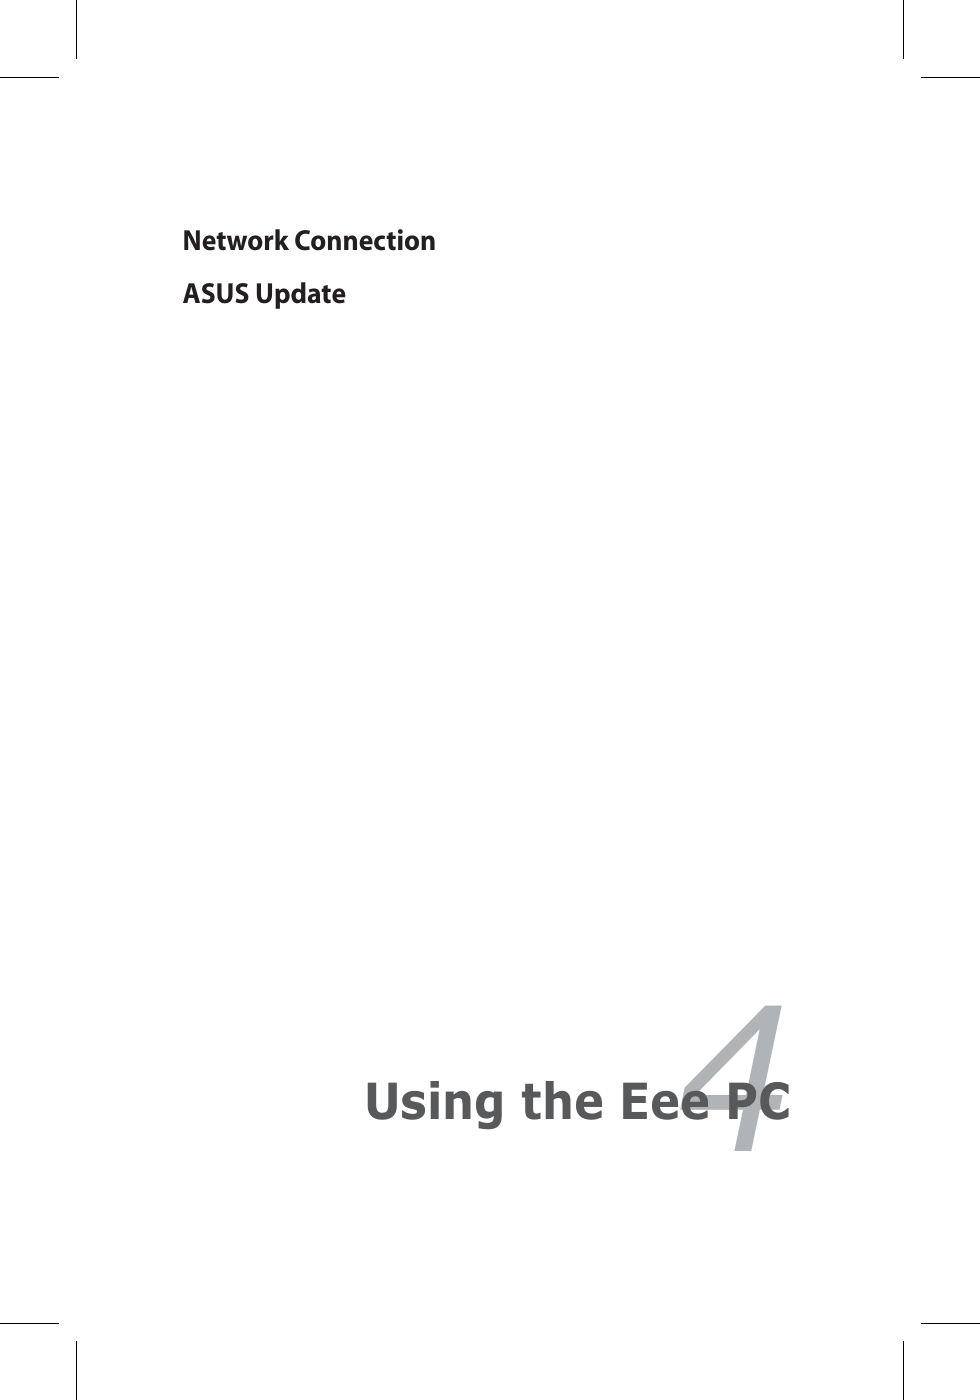 Network ConnectionASUS Update4Using the Eee PC